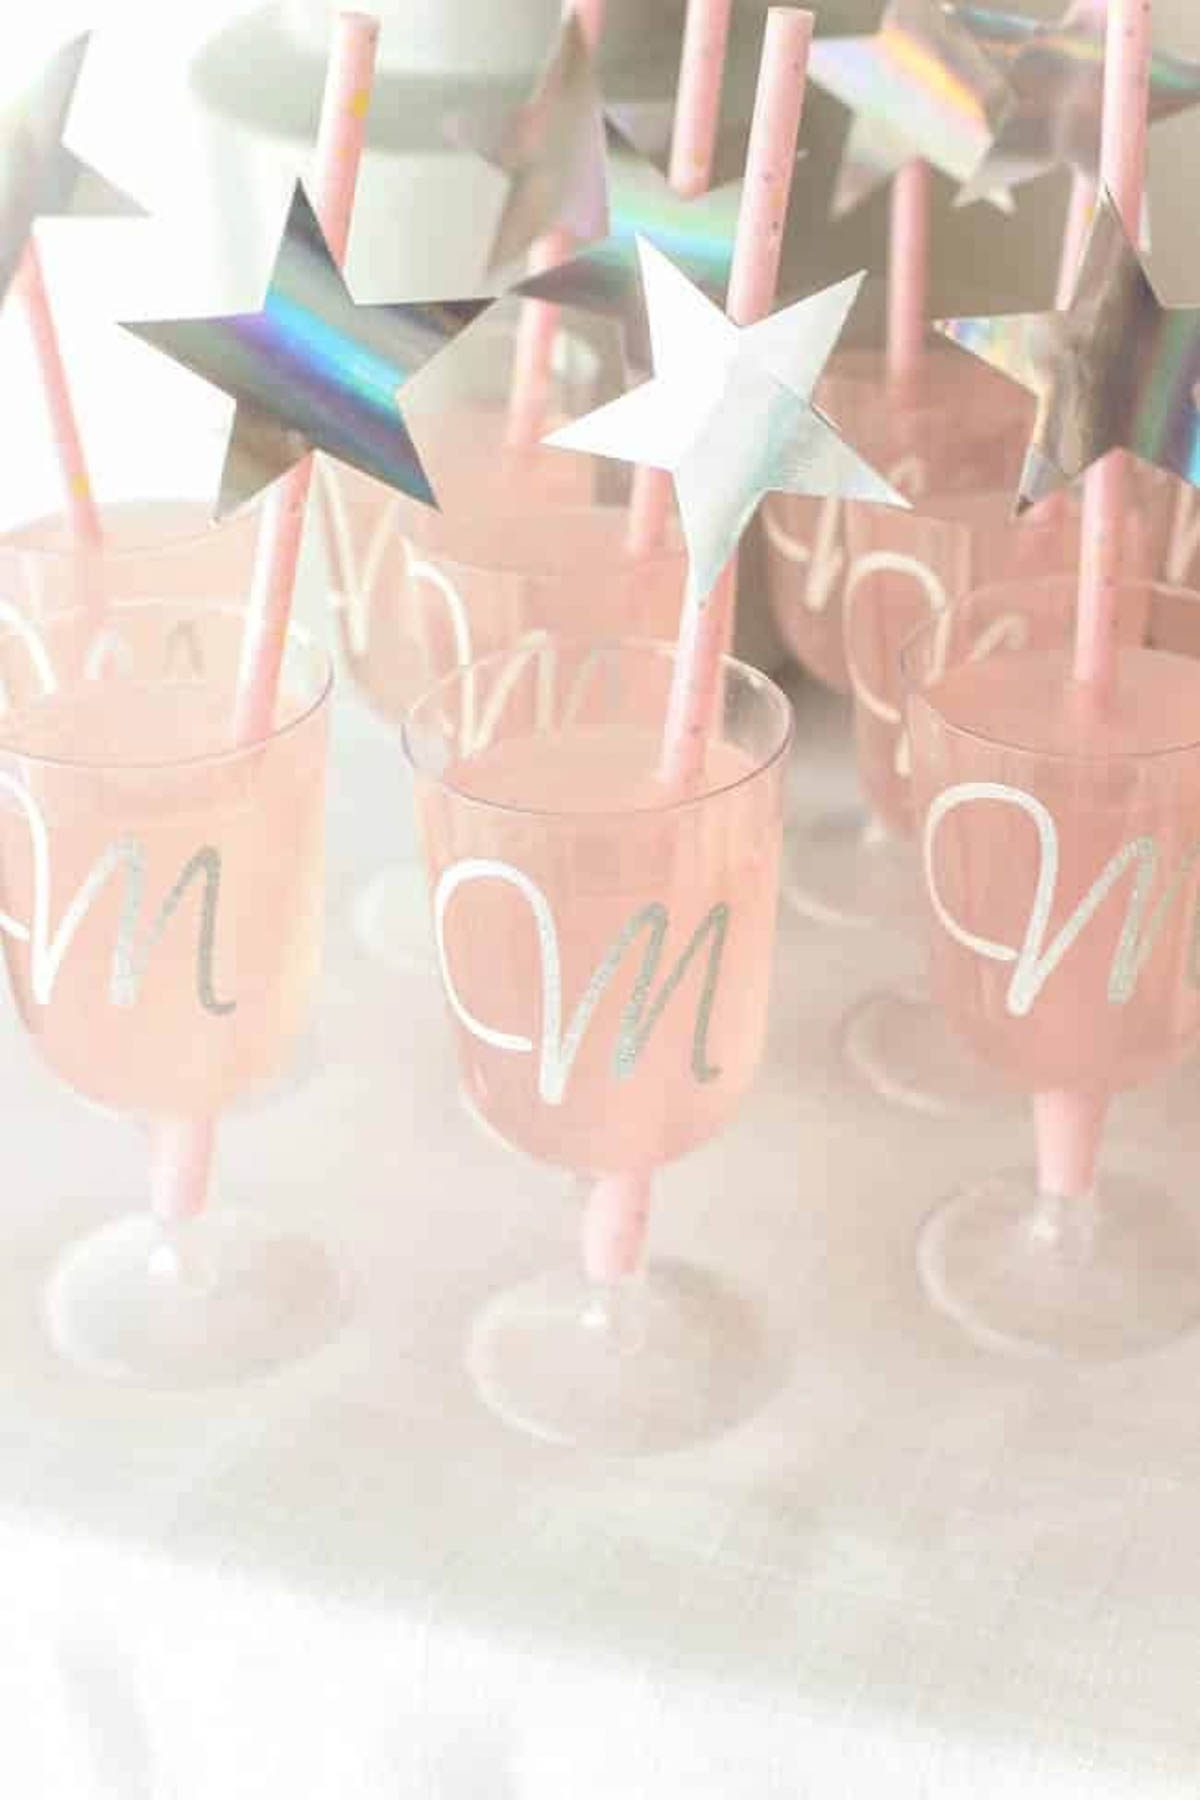 Monogramed bridal shower cocktail glasses